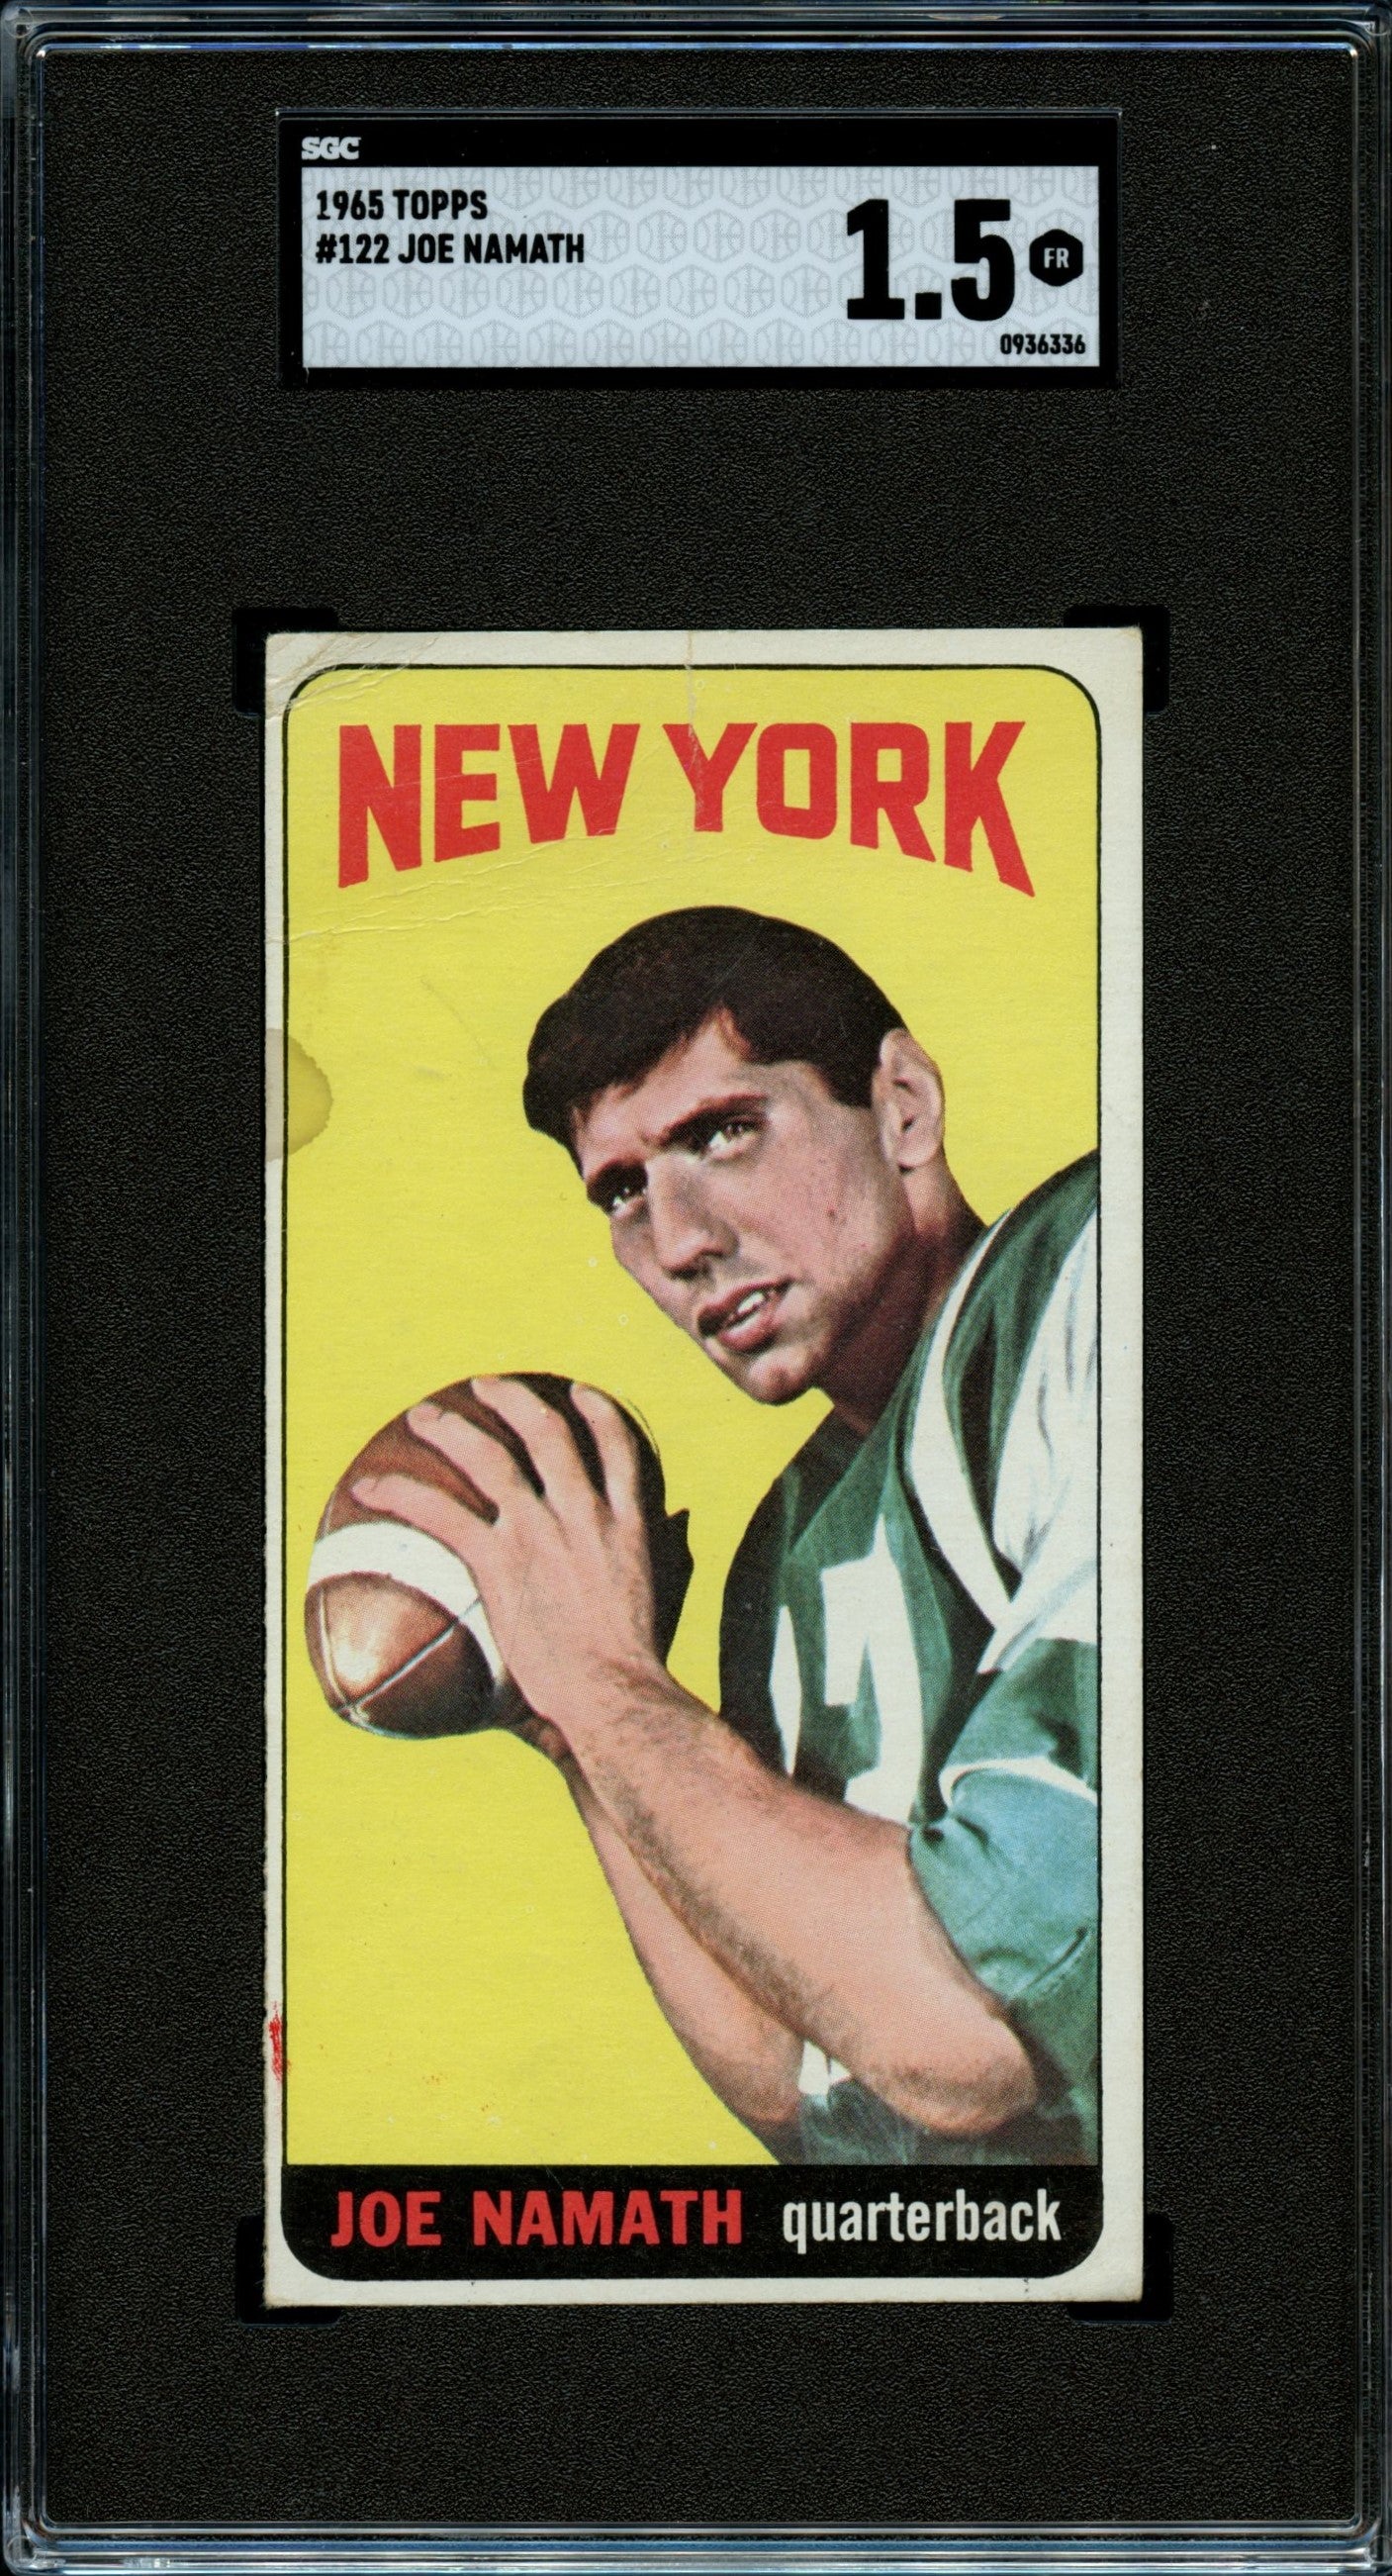 1965 Topps Football Set Break 176 Spot Random Card (Joe Namath Rookie SGC 1.5, Fred Biletnikoff Rookie SGC 4.5, George Blanda SGC 7, Don Maynard SGC 7.5, etc.!)